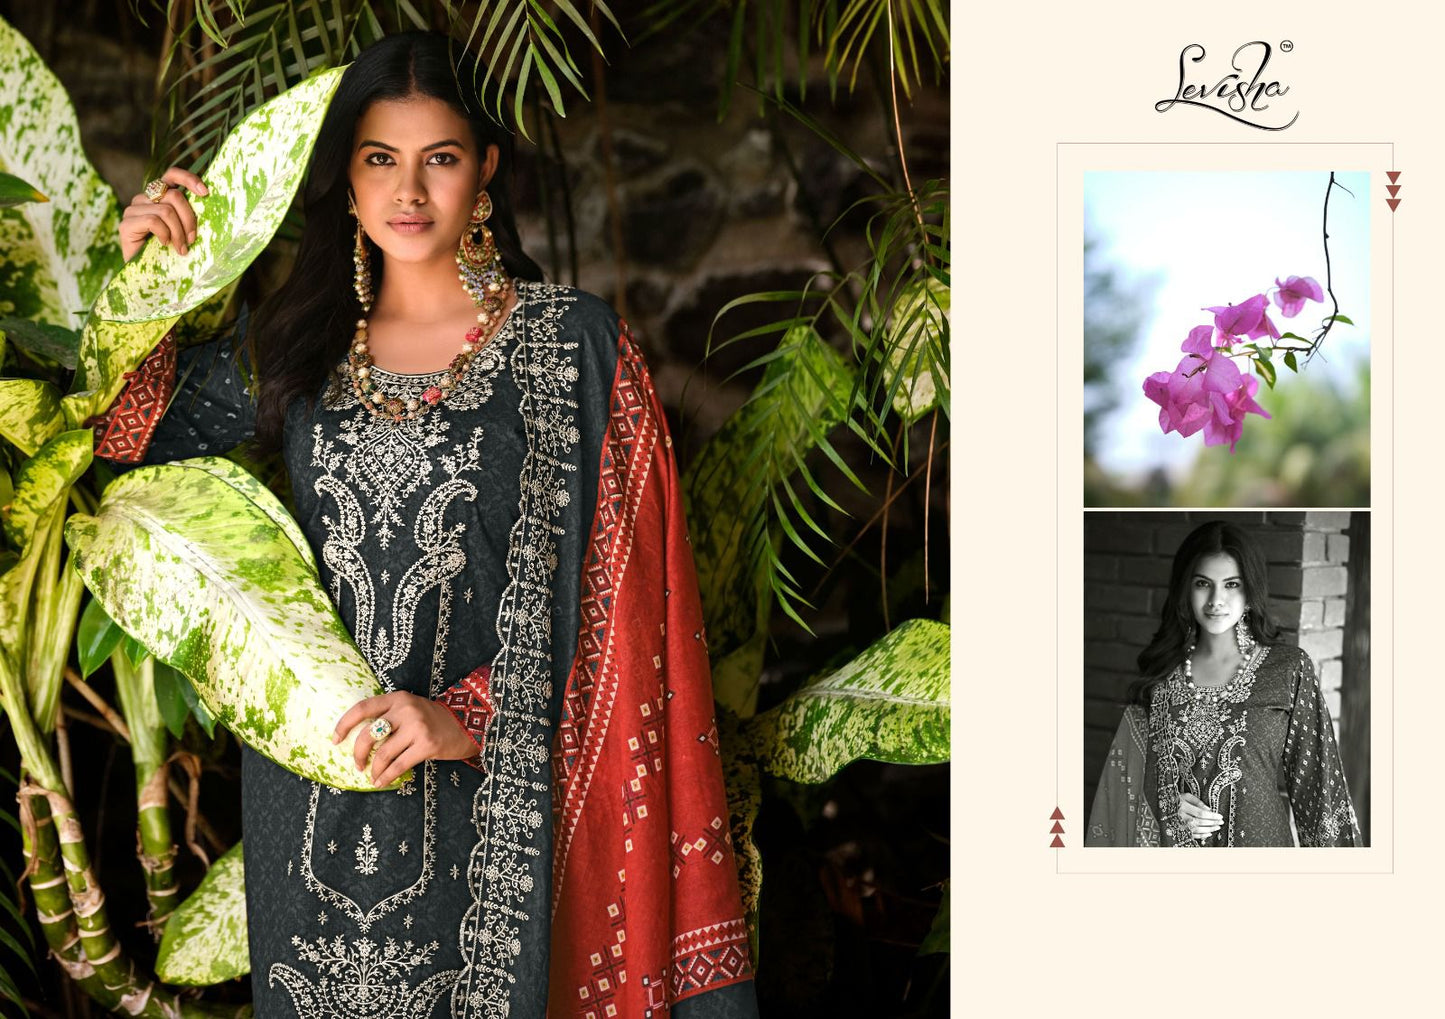 Binsaeed Levisha Cambric Cotton Karachi Salwar Suits